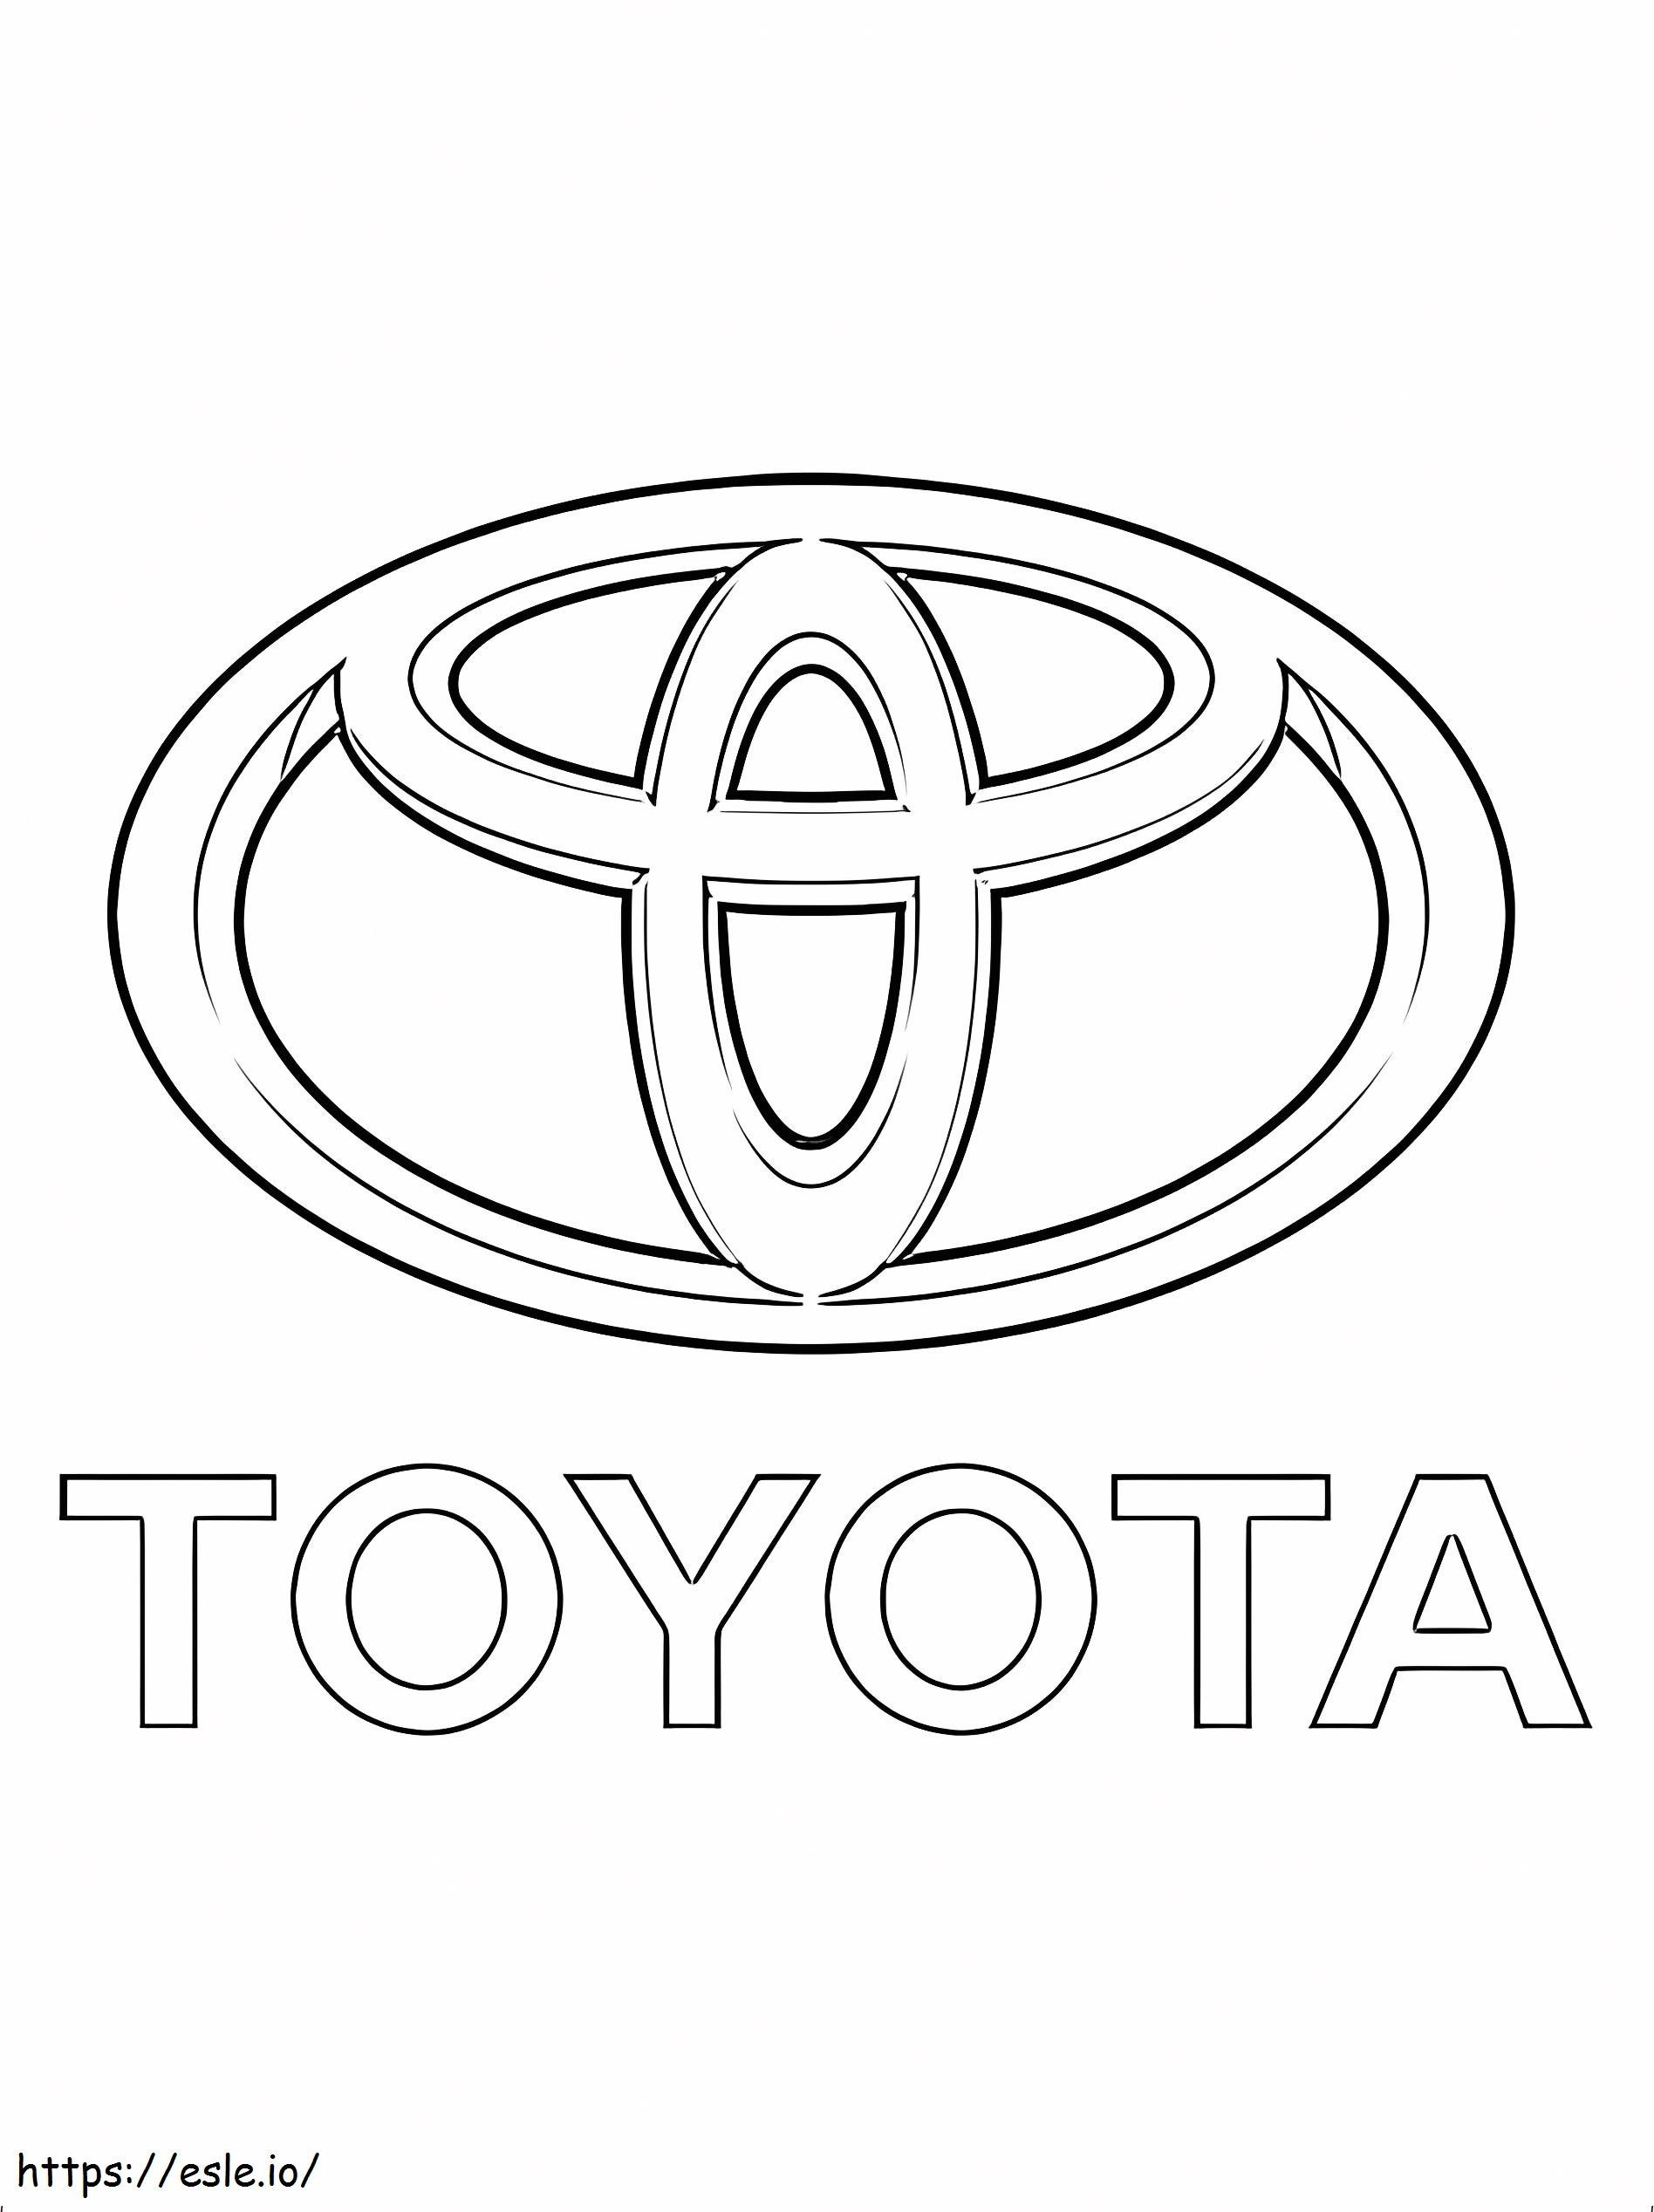 Logo Toyoty kolorowanka